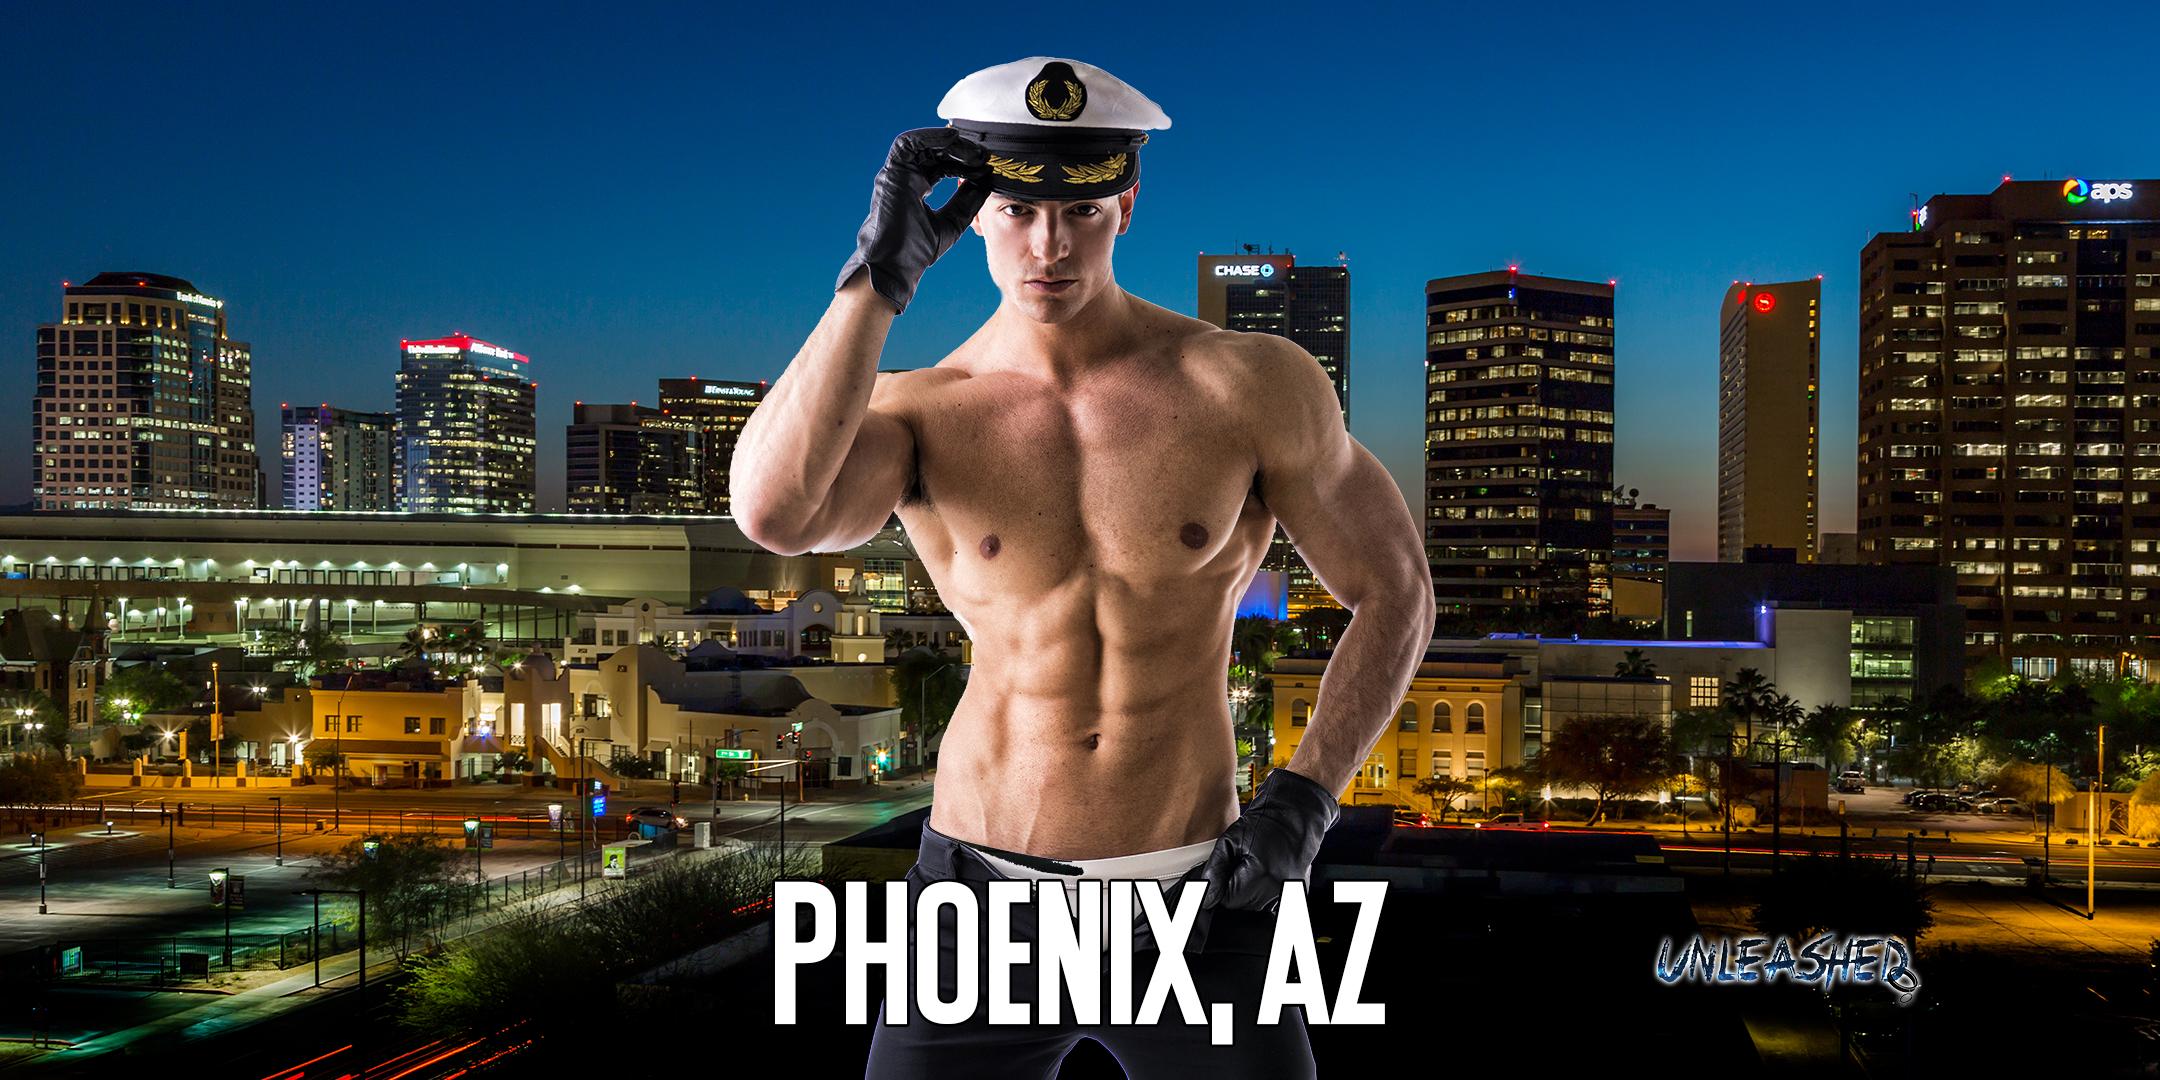 Male Strippers UNLEASHED Male Revue Phoenix, AZ 8-9:30 PM